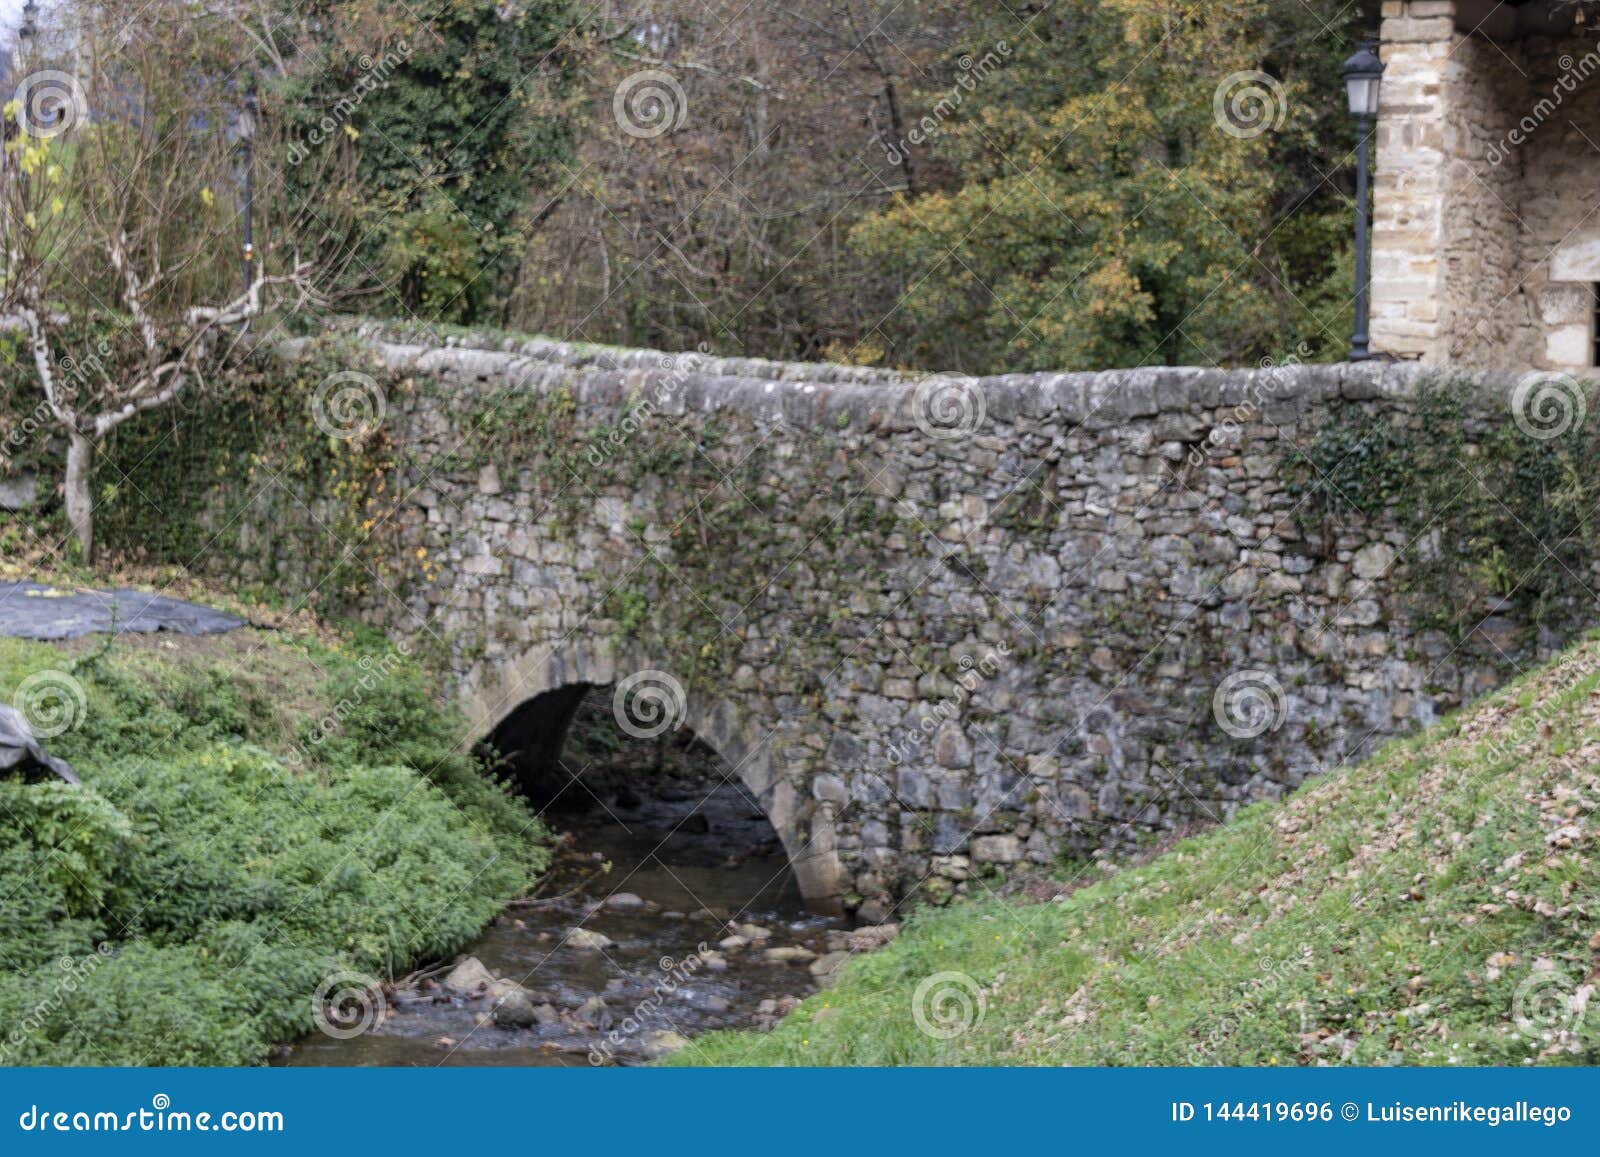 stone bridge on the river